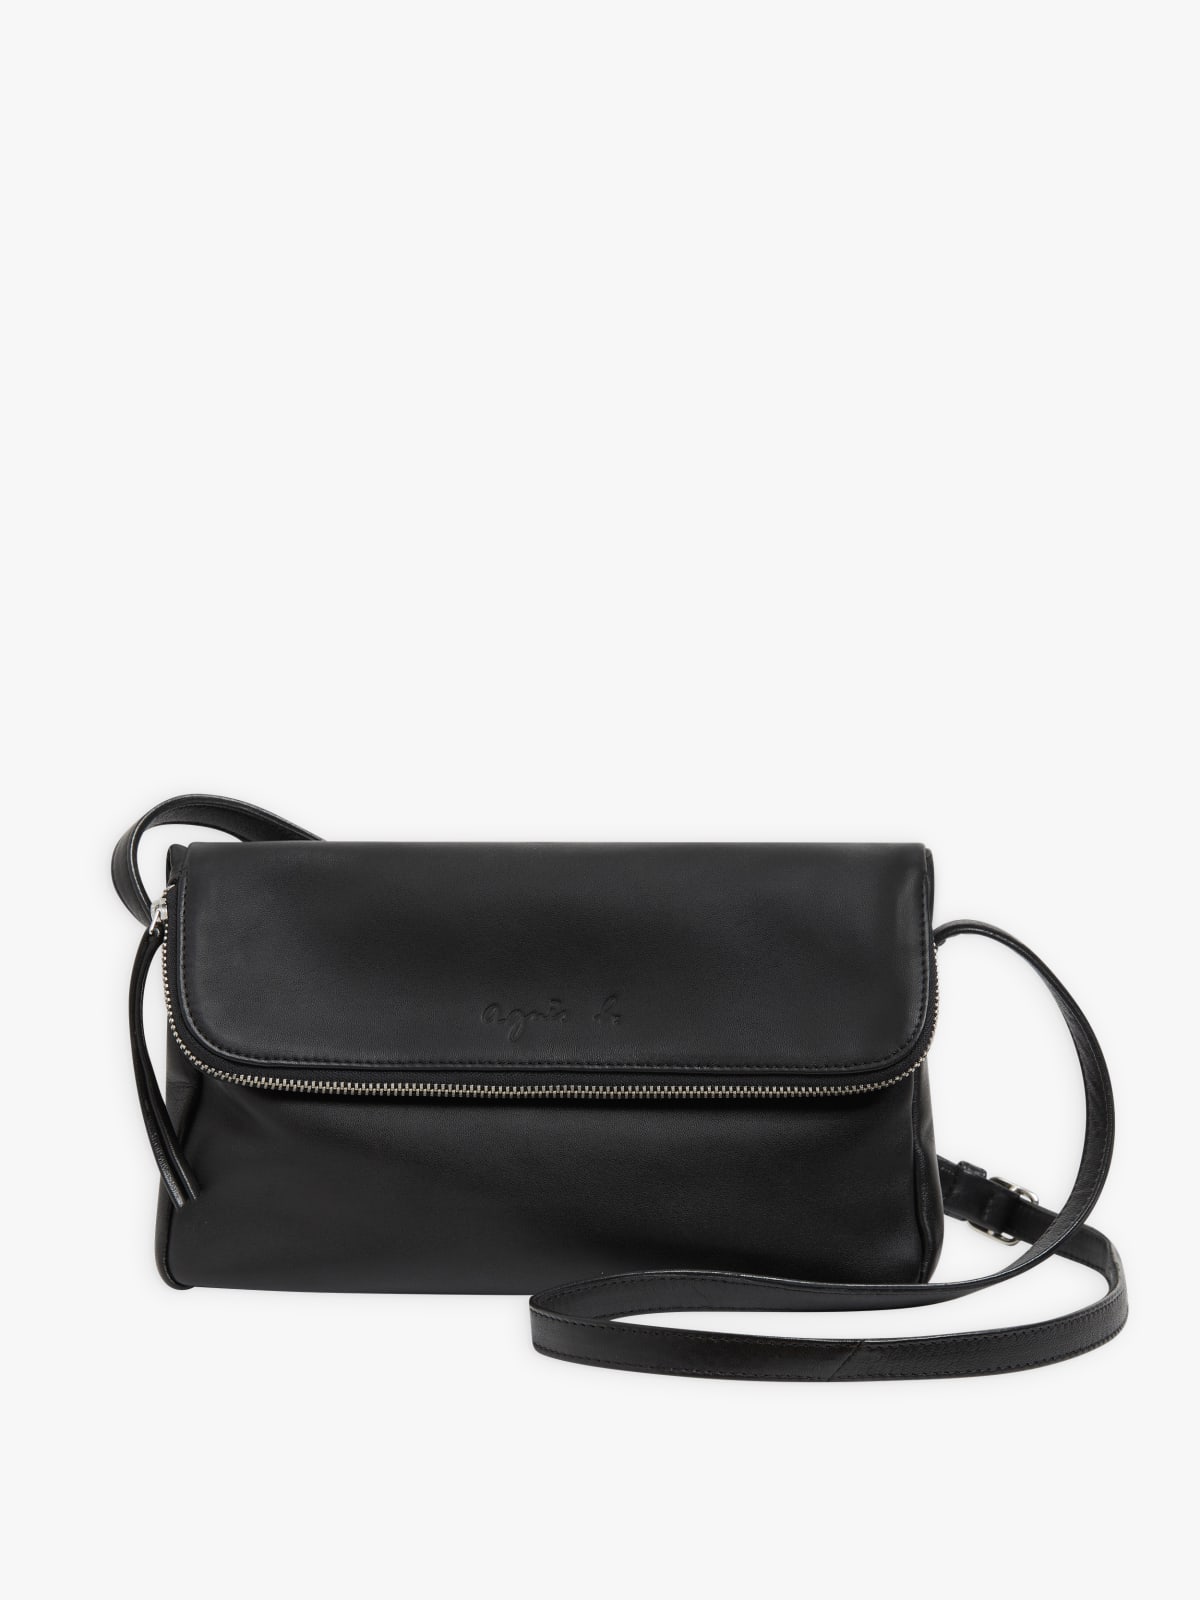 black leather Asya bag